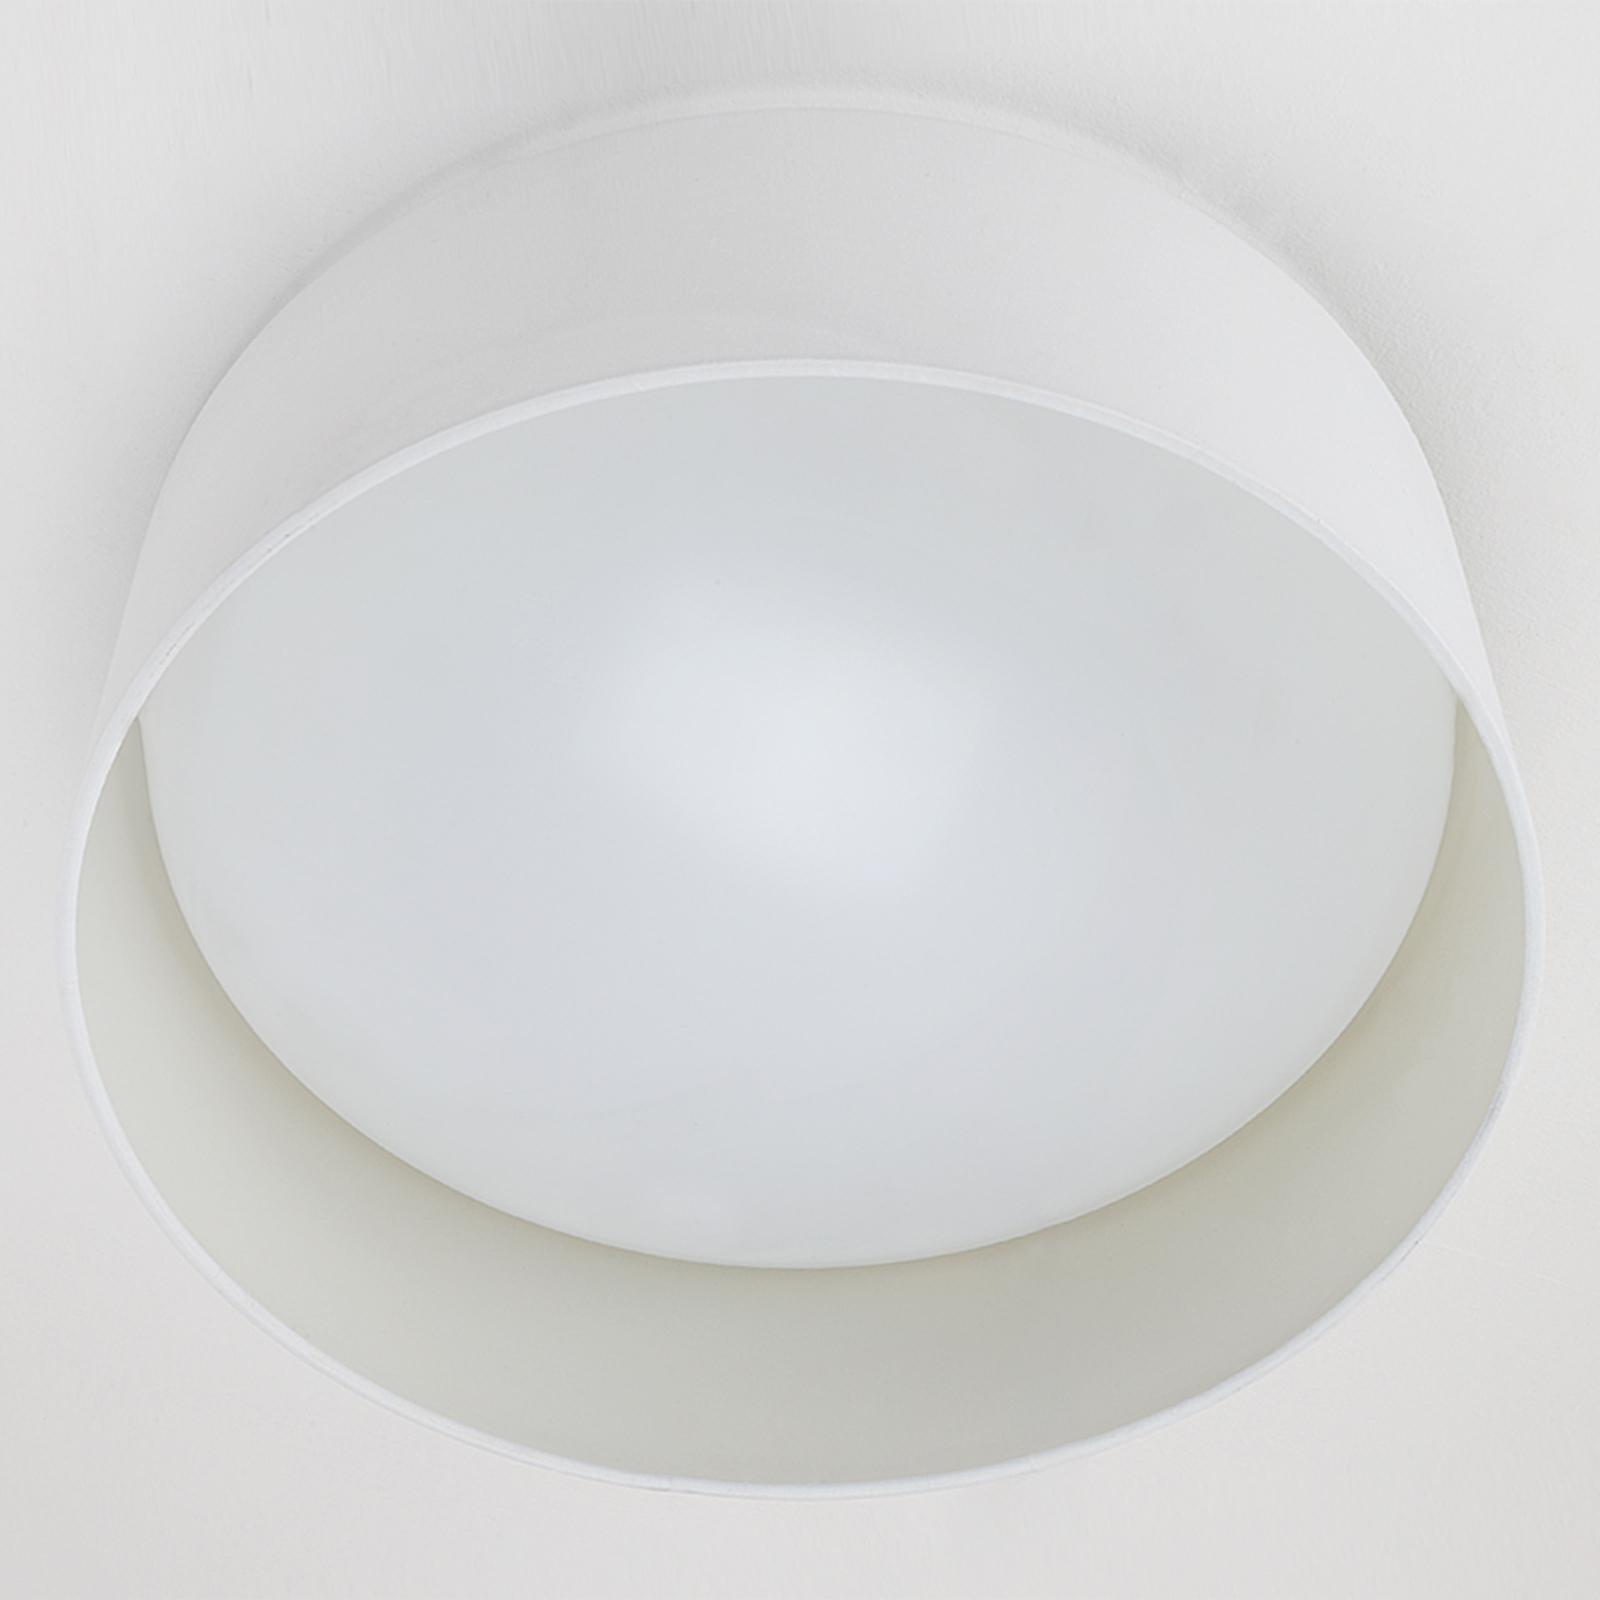 LED plafondlamp Franka, wit, 41,5 cm